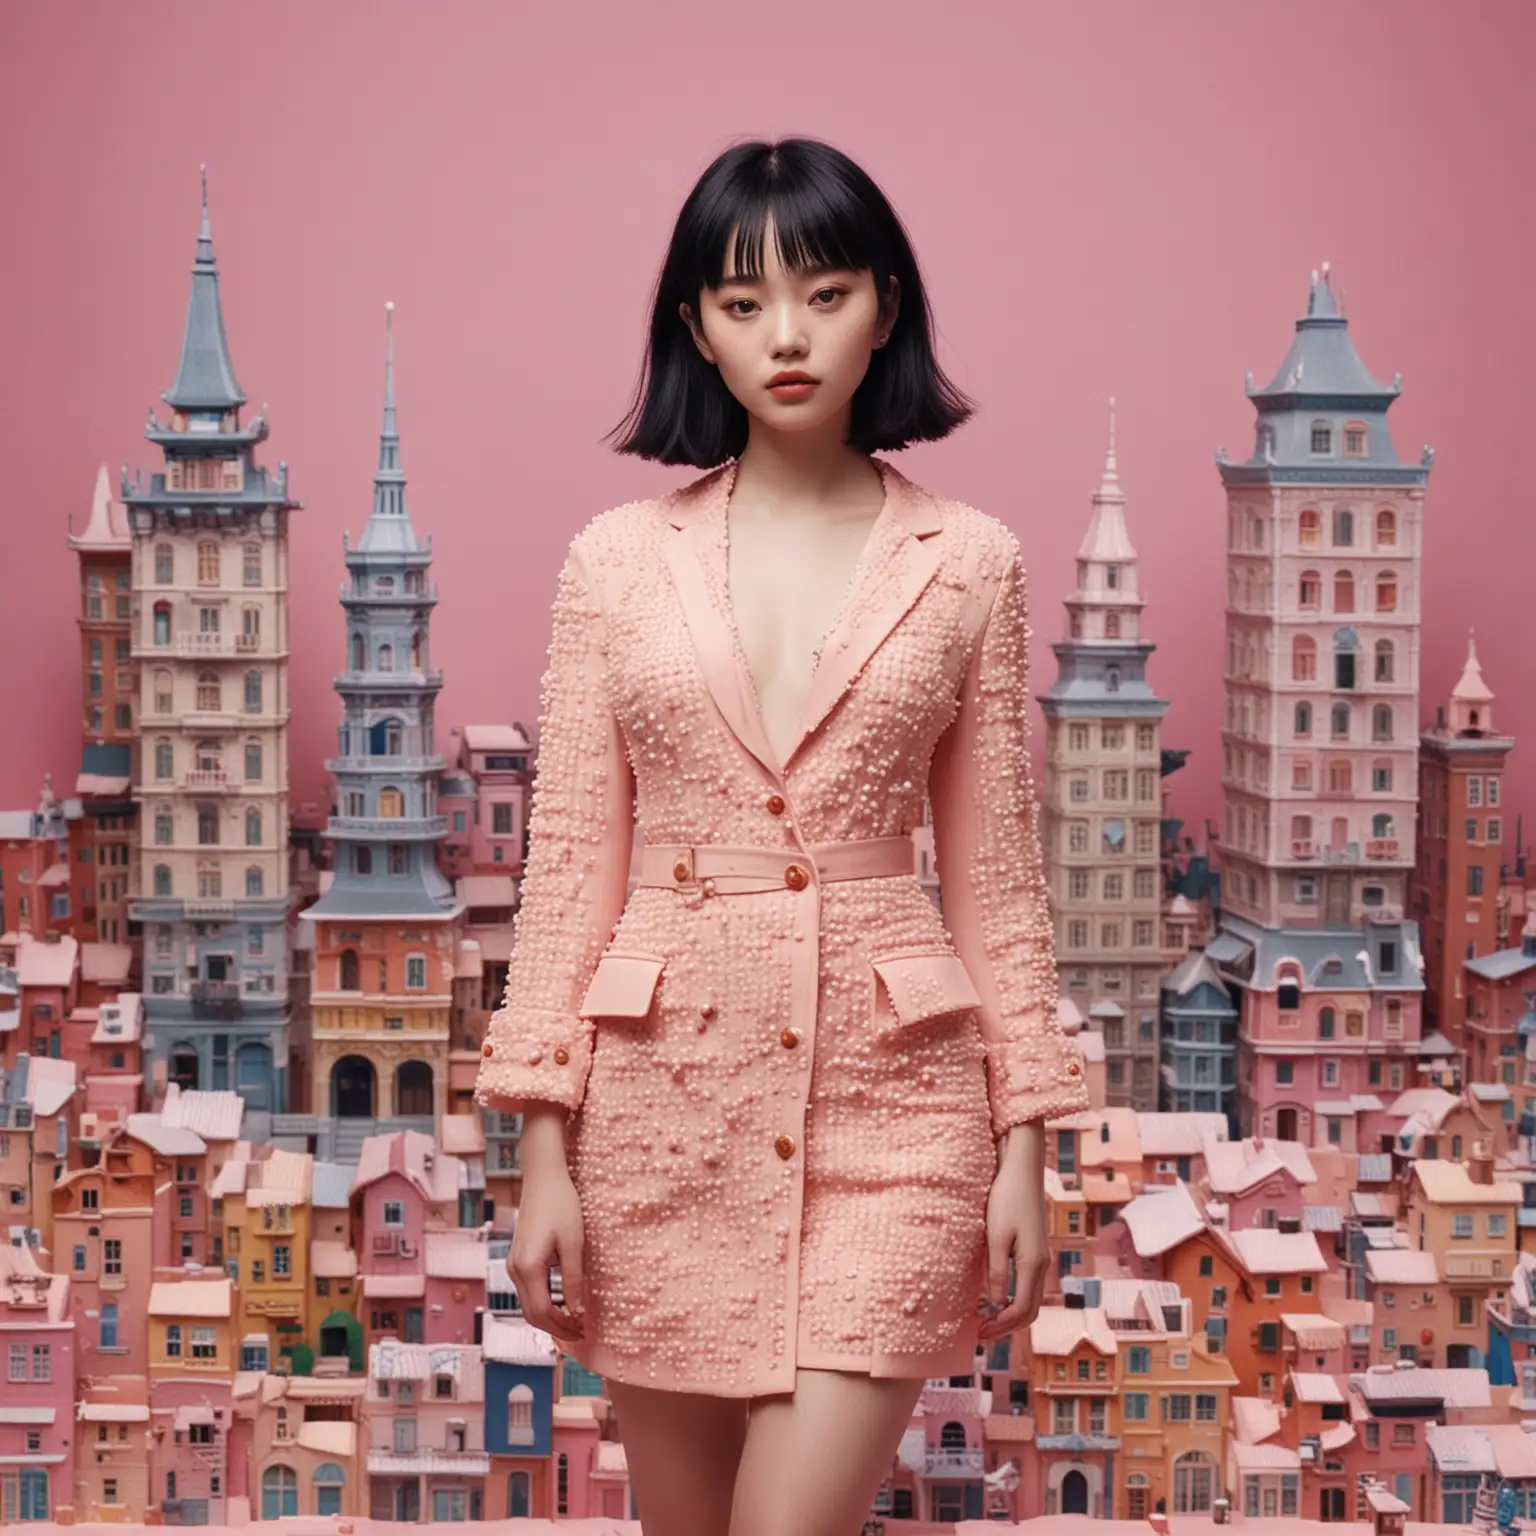 AvantGarde Miniature Fashion Photography with Nana Komatsu